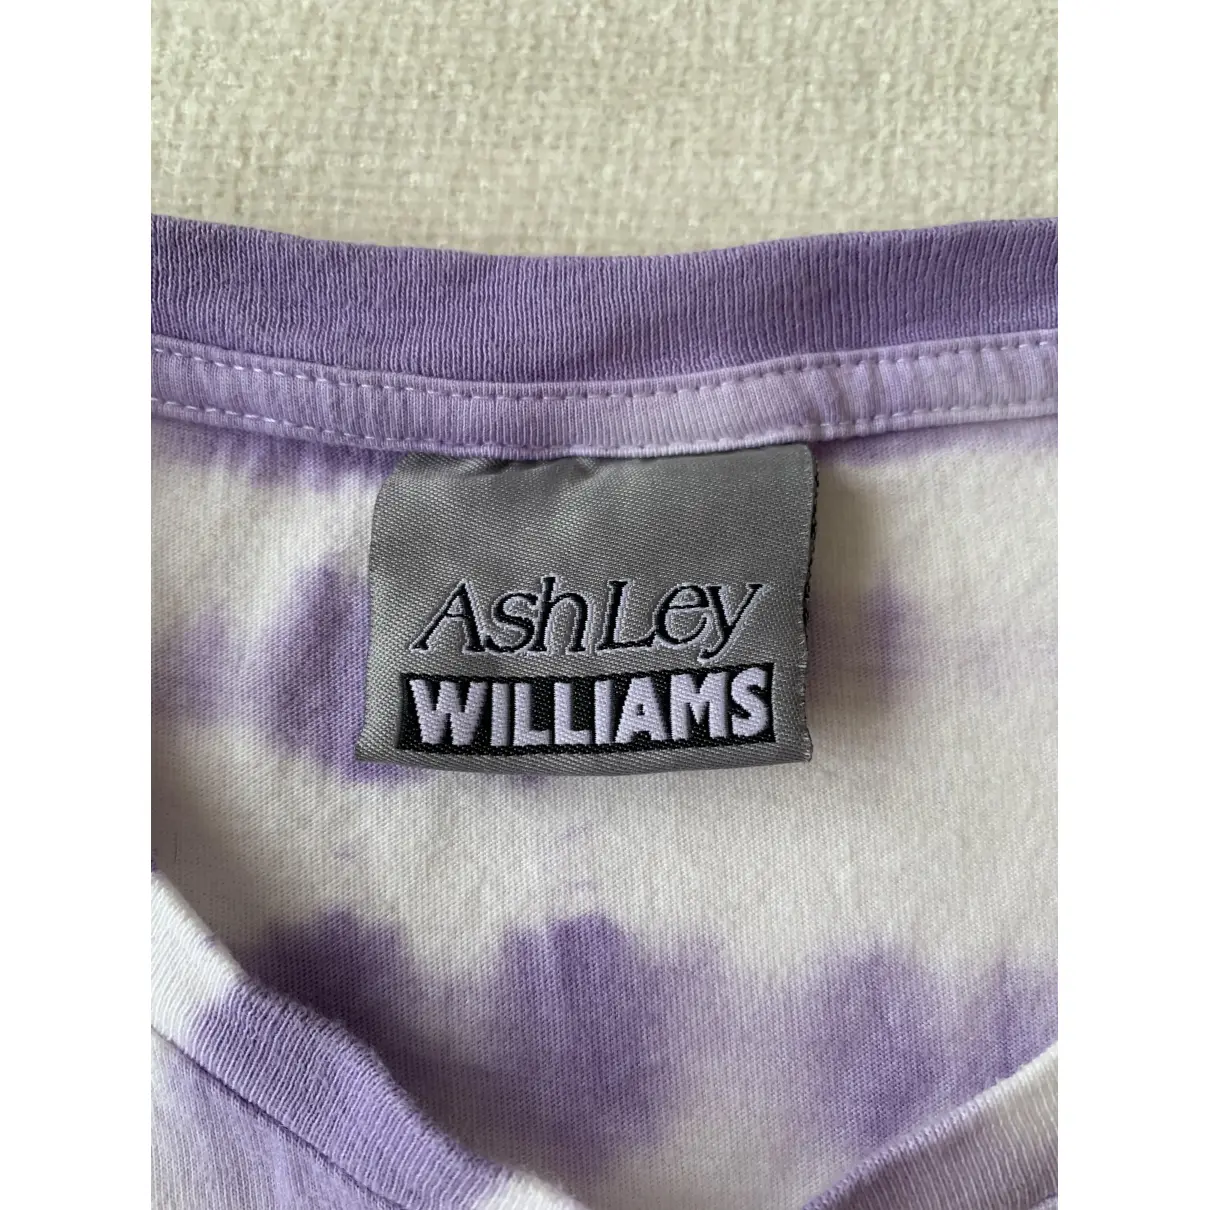 Buy Ashley Williams T-shirt online